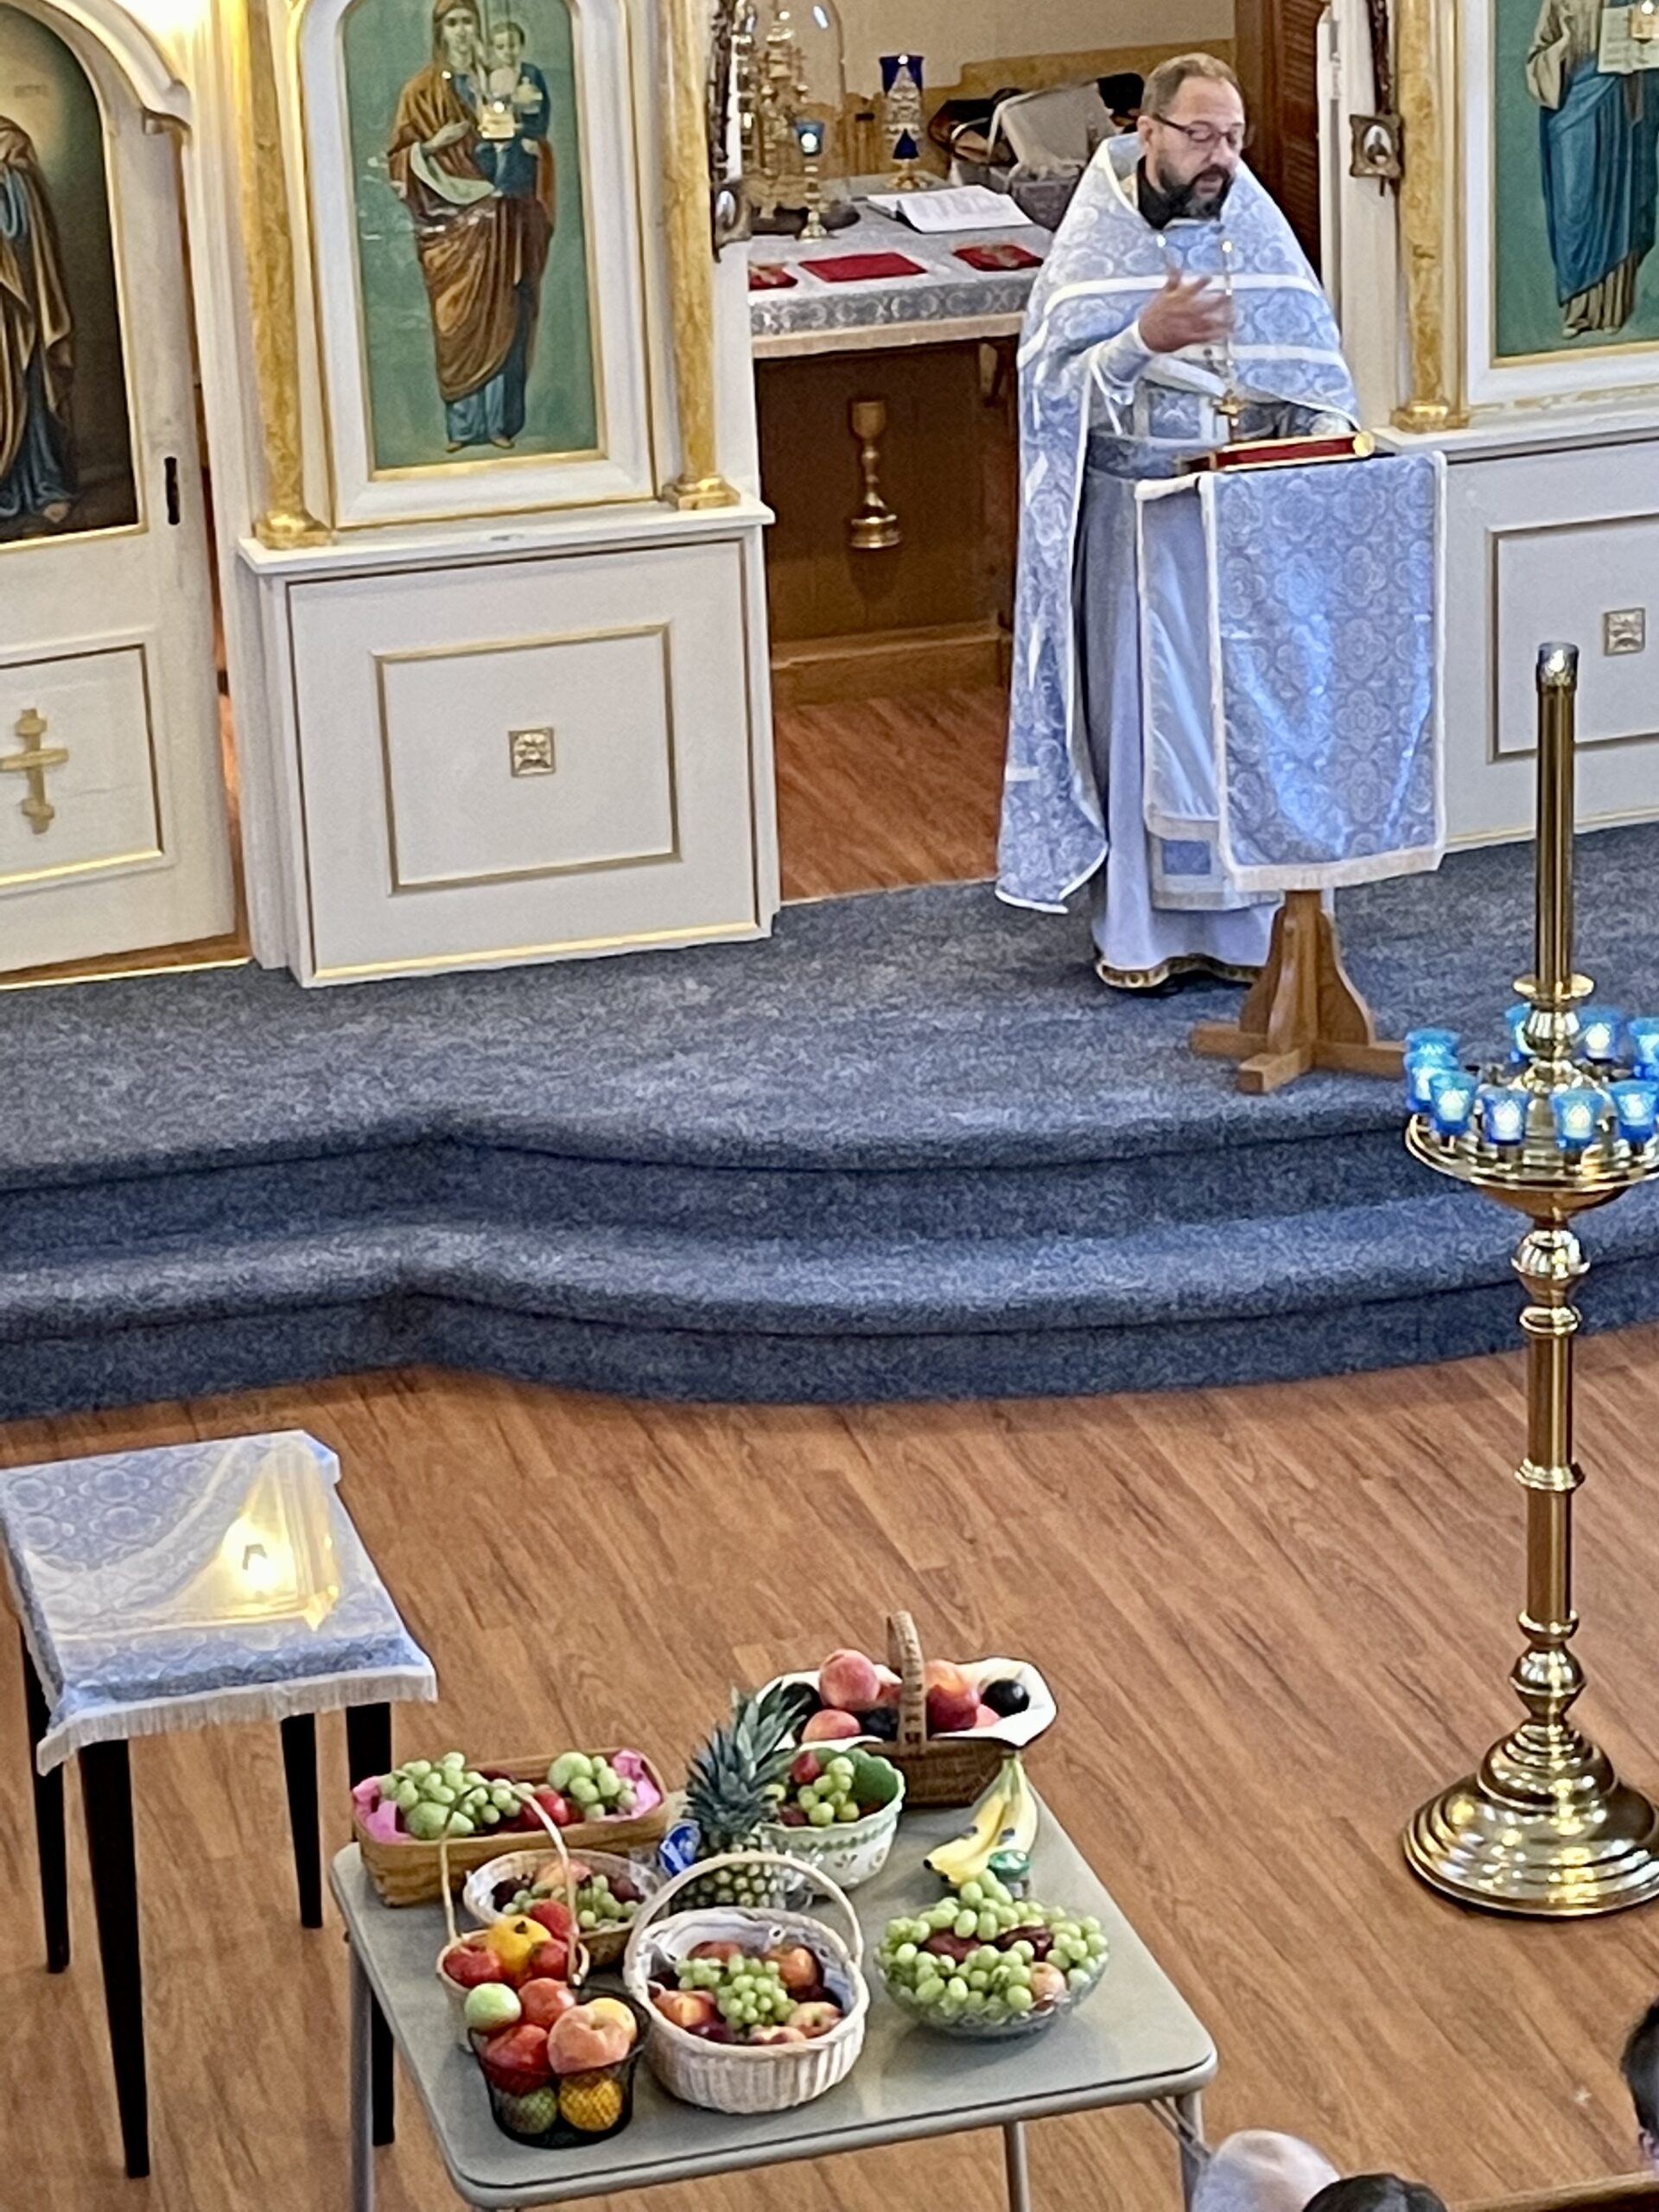 Orthodox priest reads the gospel